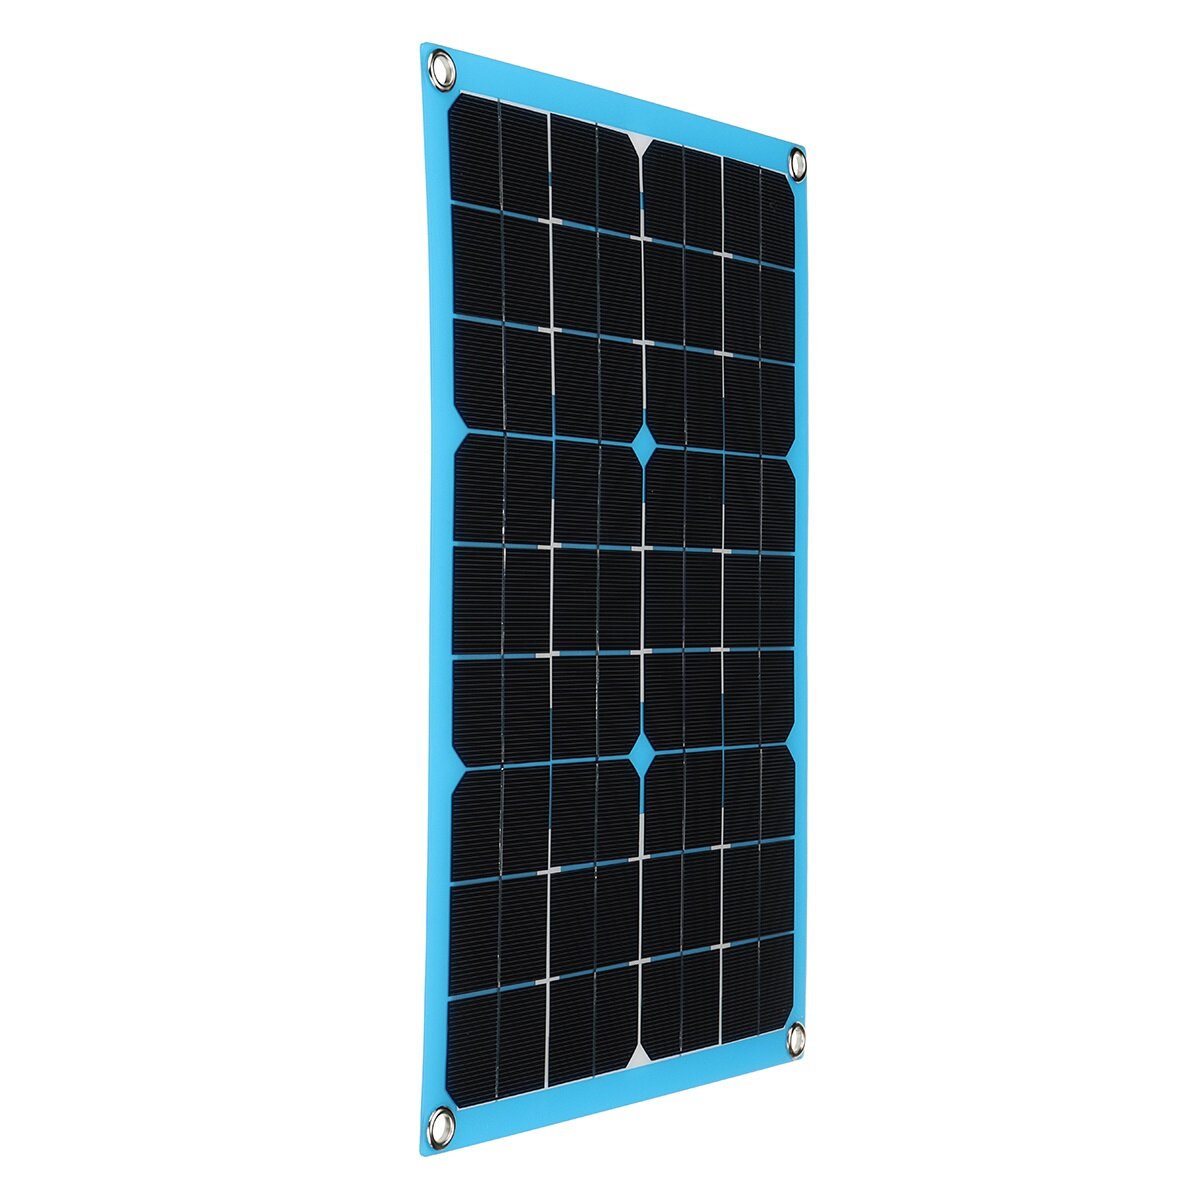 Monocristalino Solar Panel inversor de corriente sistema DC/USB Solar cargador con controlador para el hogar Coche RV barco Batería cargador